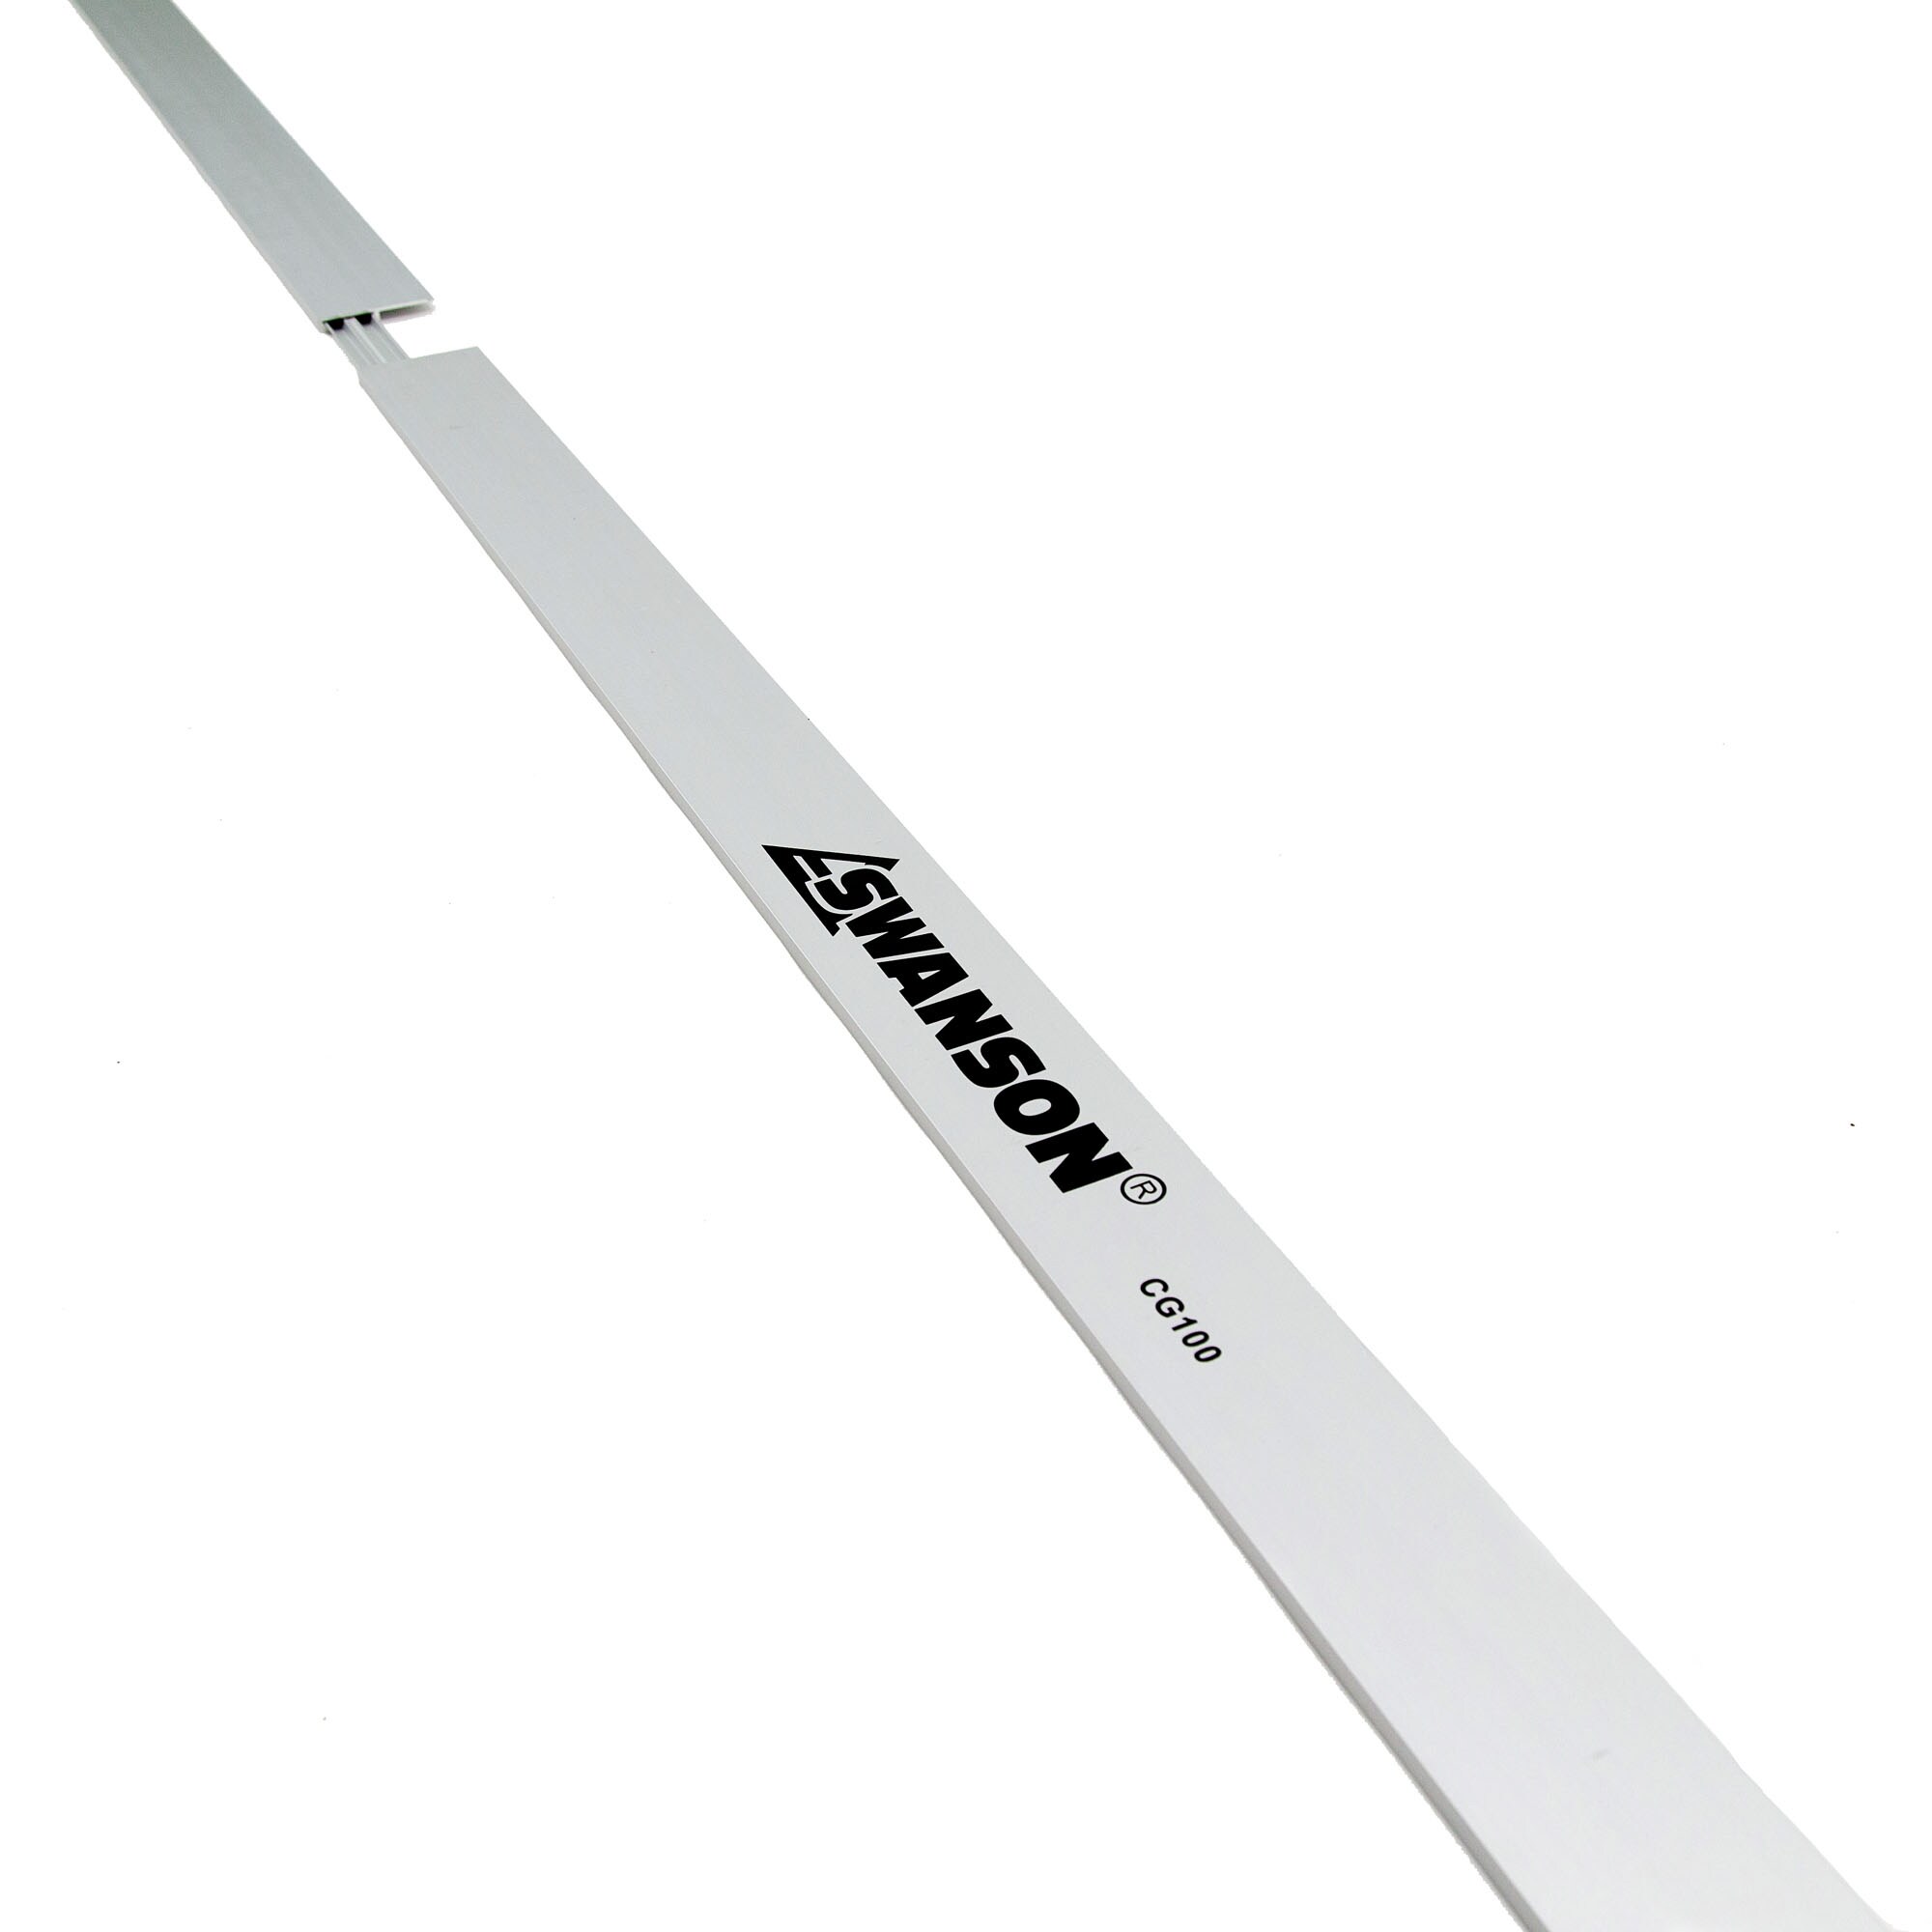 Swanson Tool Company 4-ft Metal Ruler in the Yardsticks & Rulers